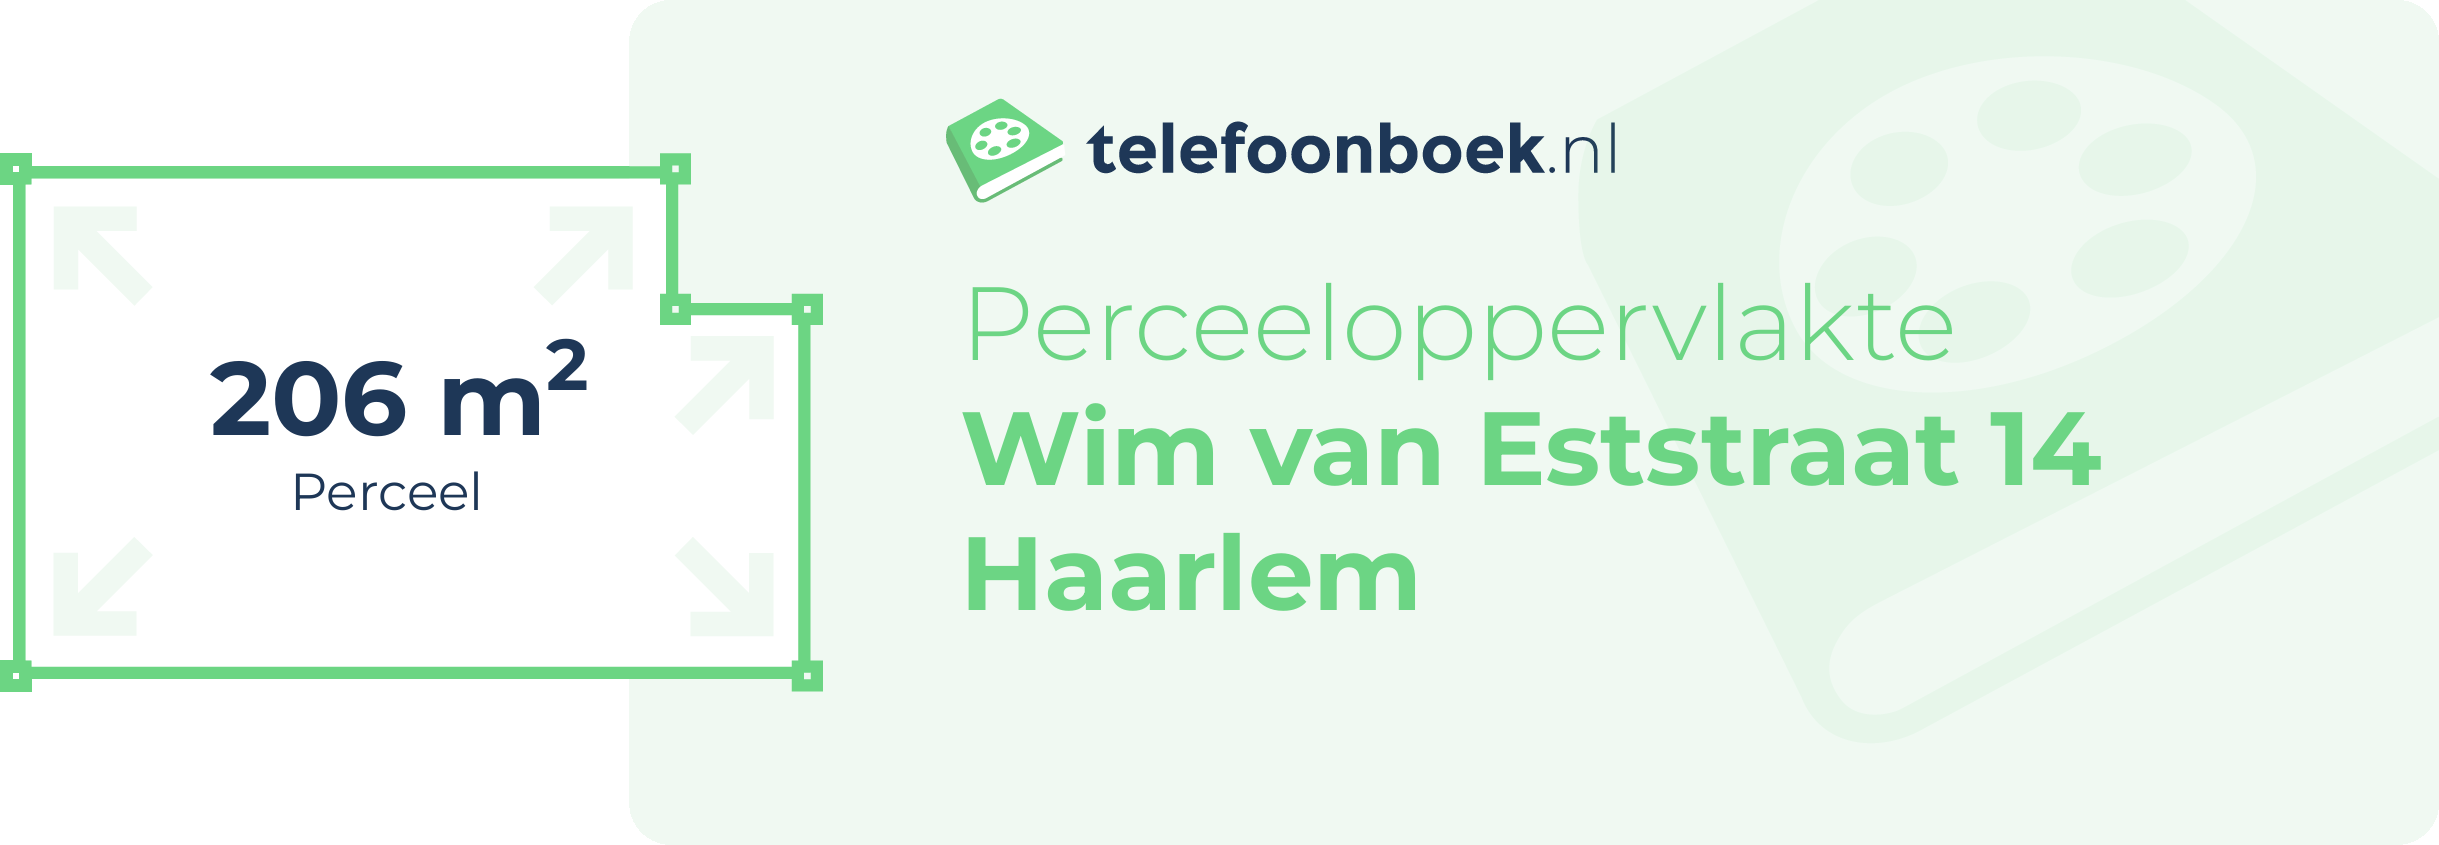 Perceeloppervlakte Wim Van Eststraat 14 Haarlem